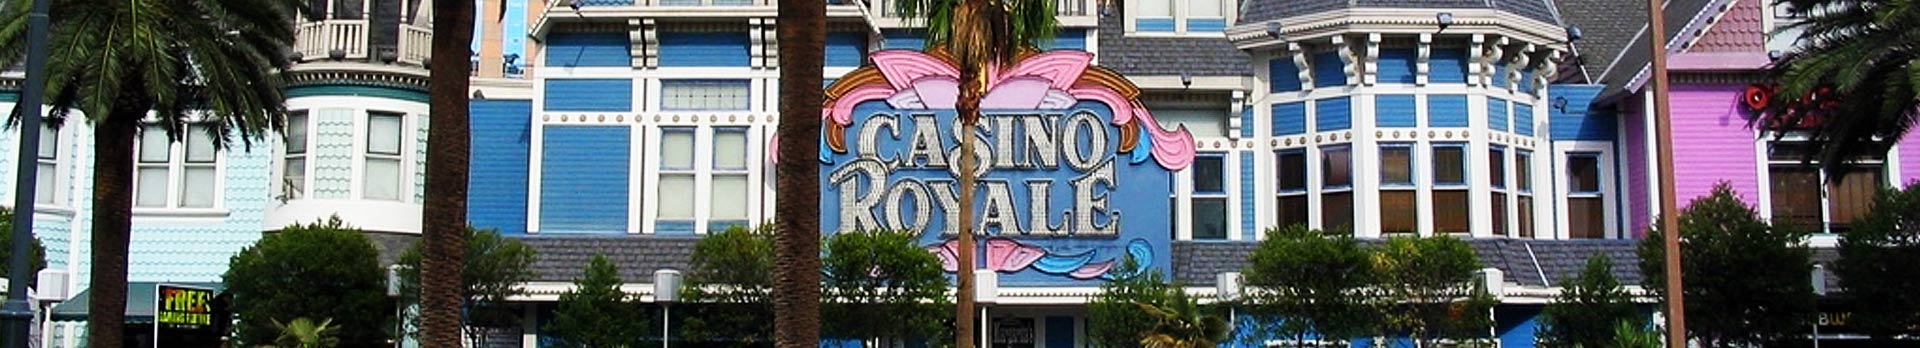 Casino Royale Hotel and Casino